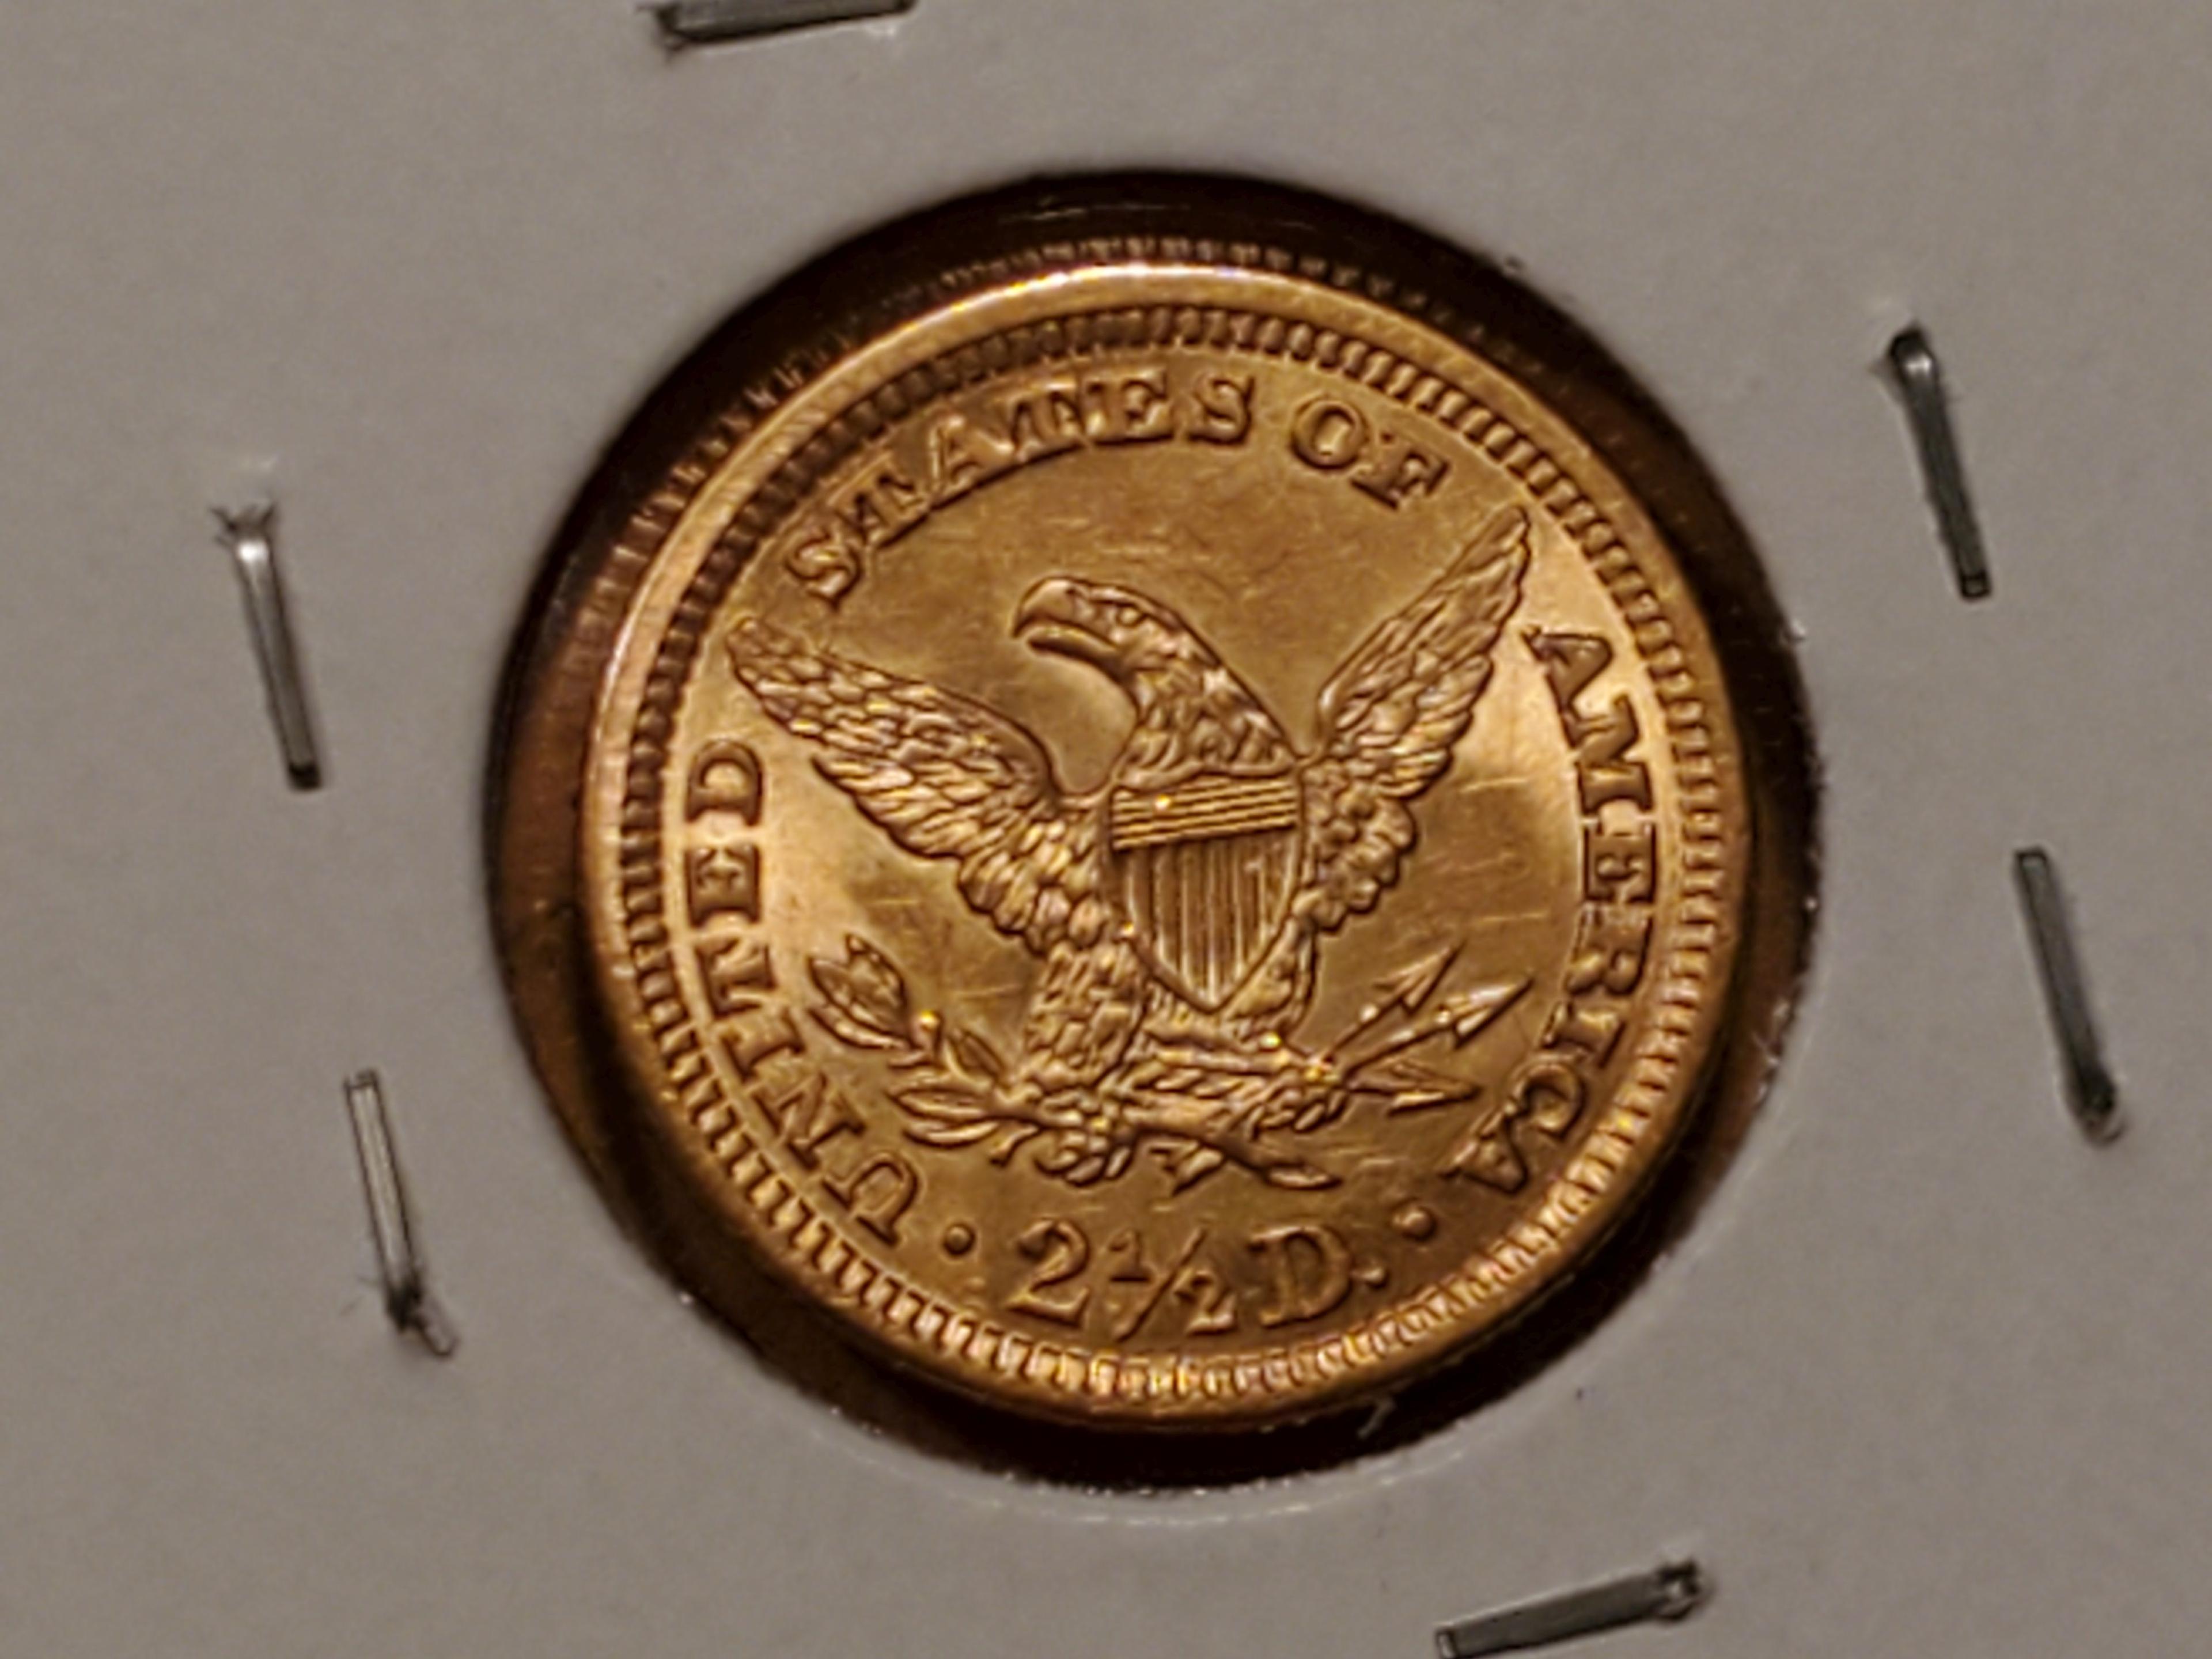 GOLD! Beautiful 1904 Liberty $2.5 gold Quarter Eagle in BU